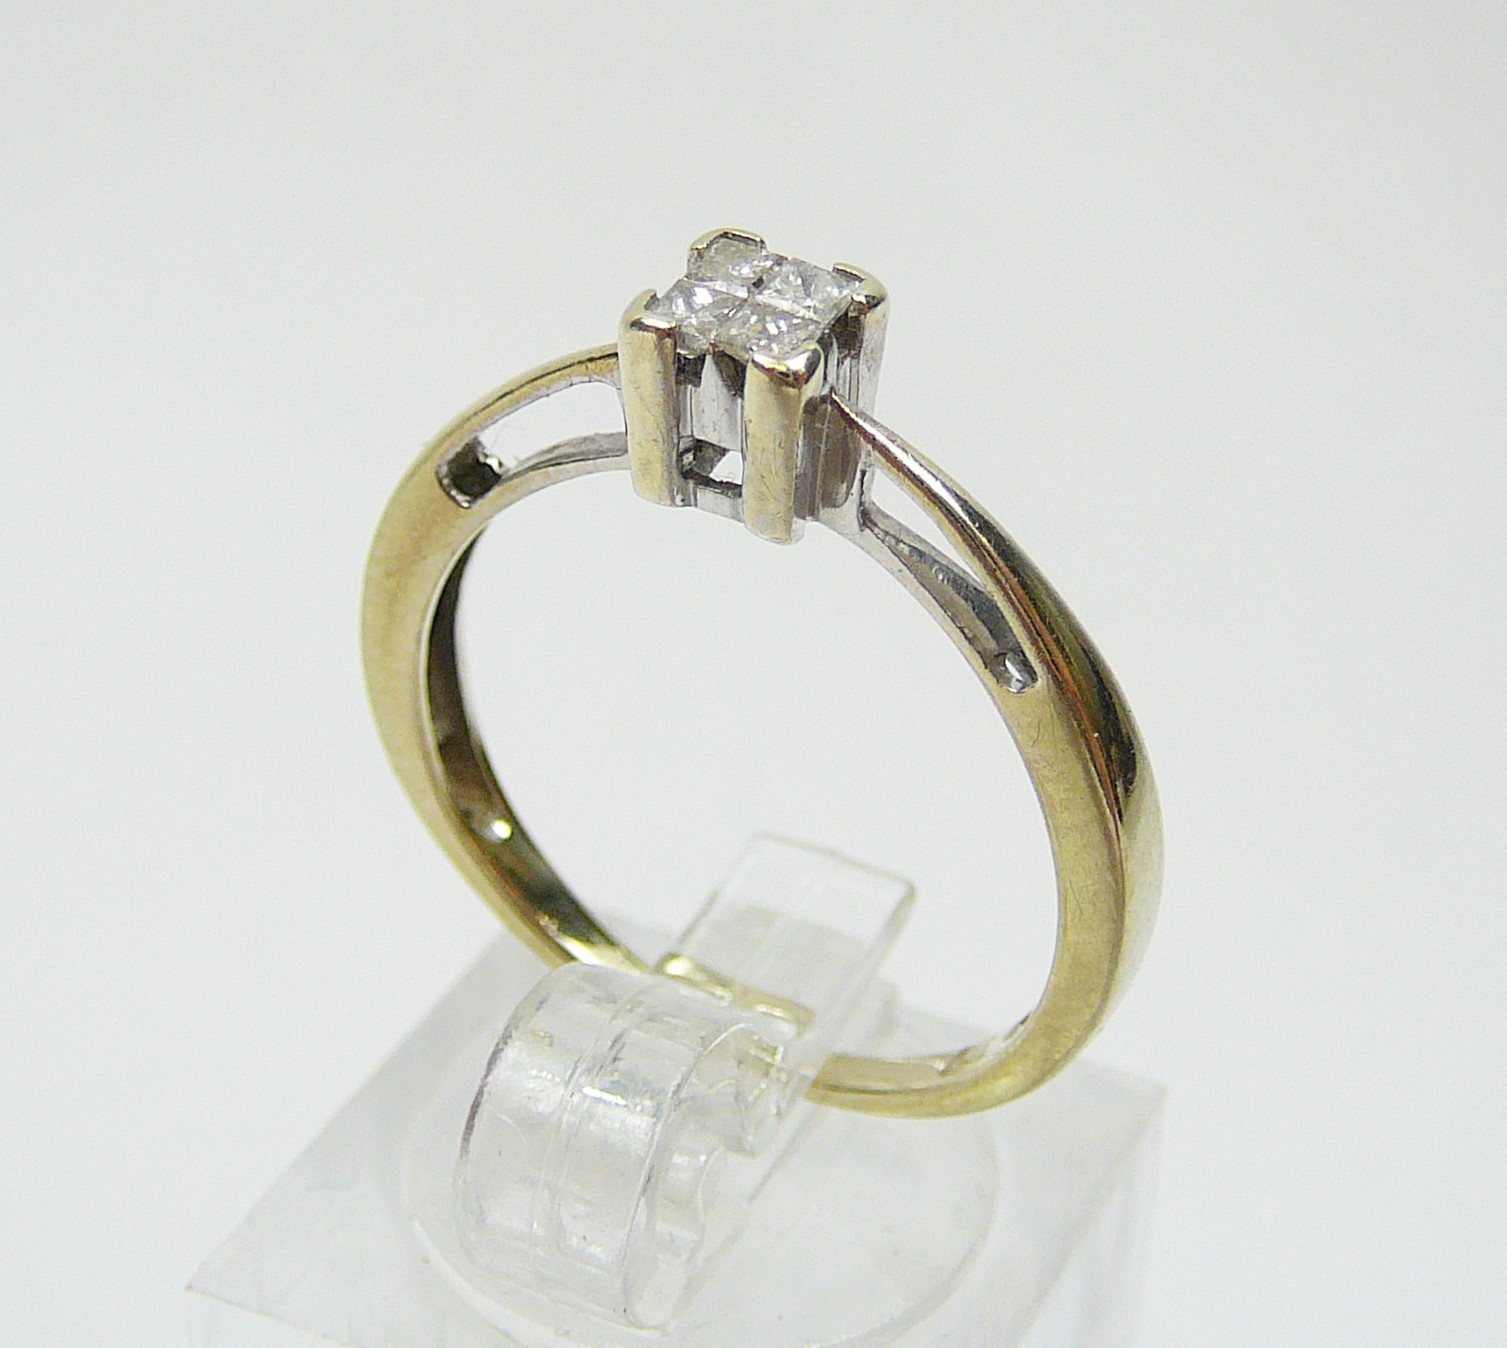 9ct white gold diamond ring